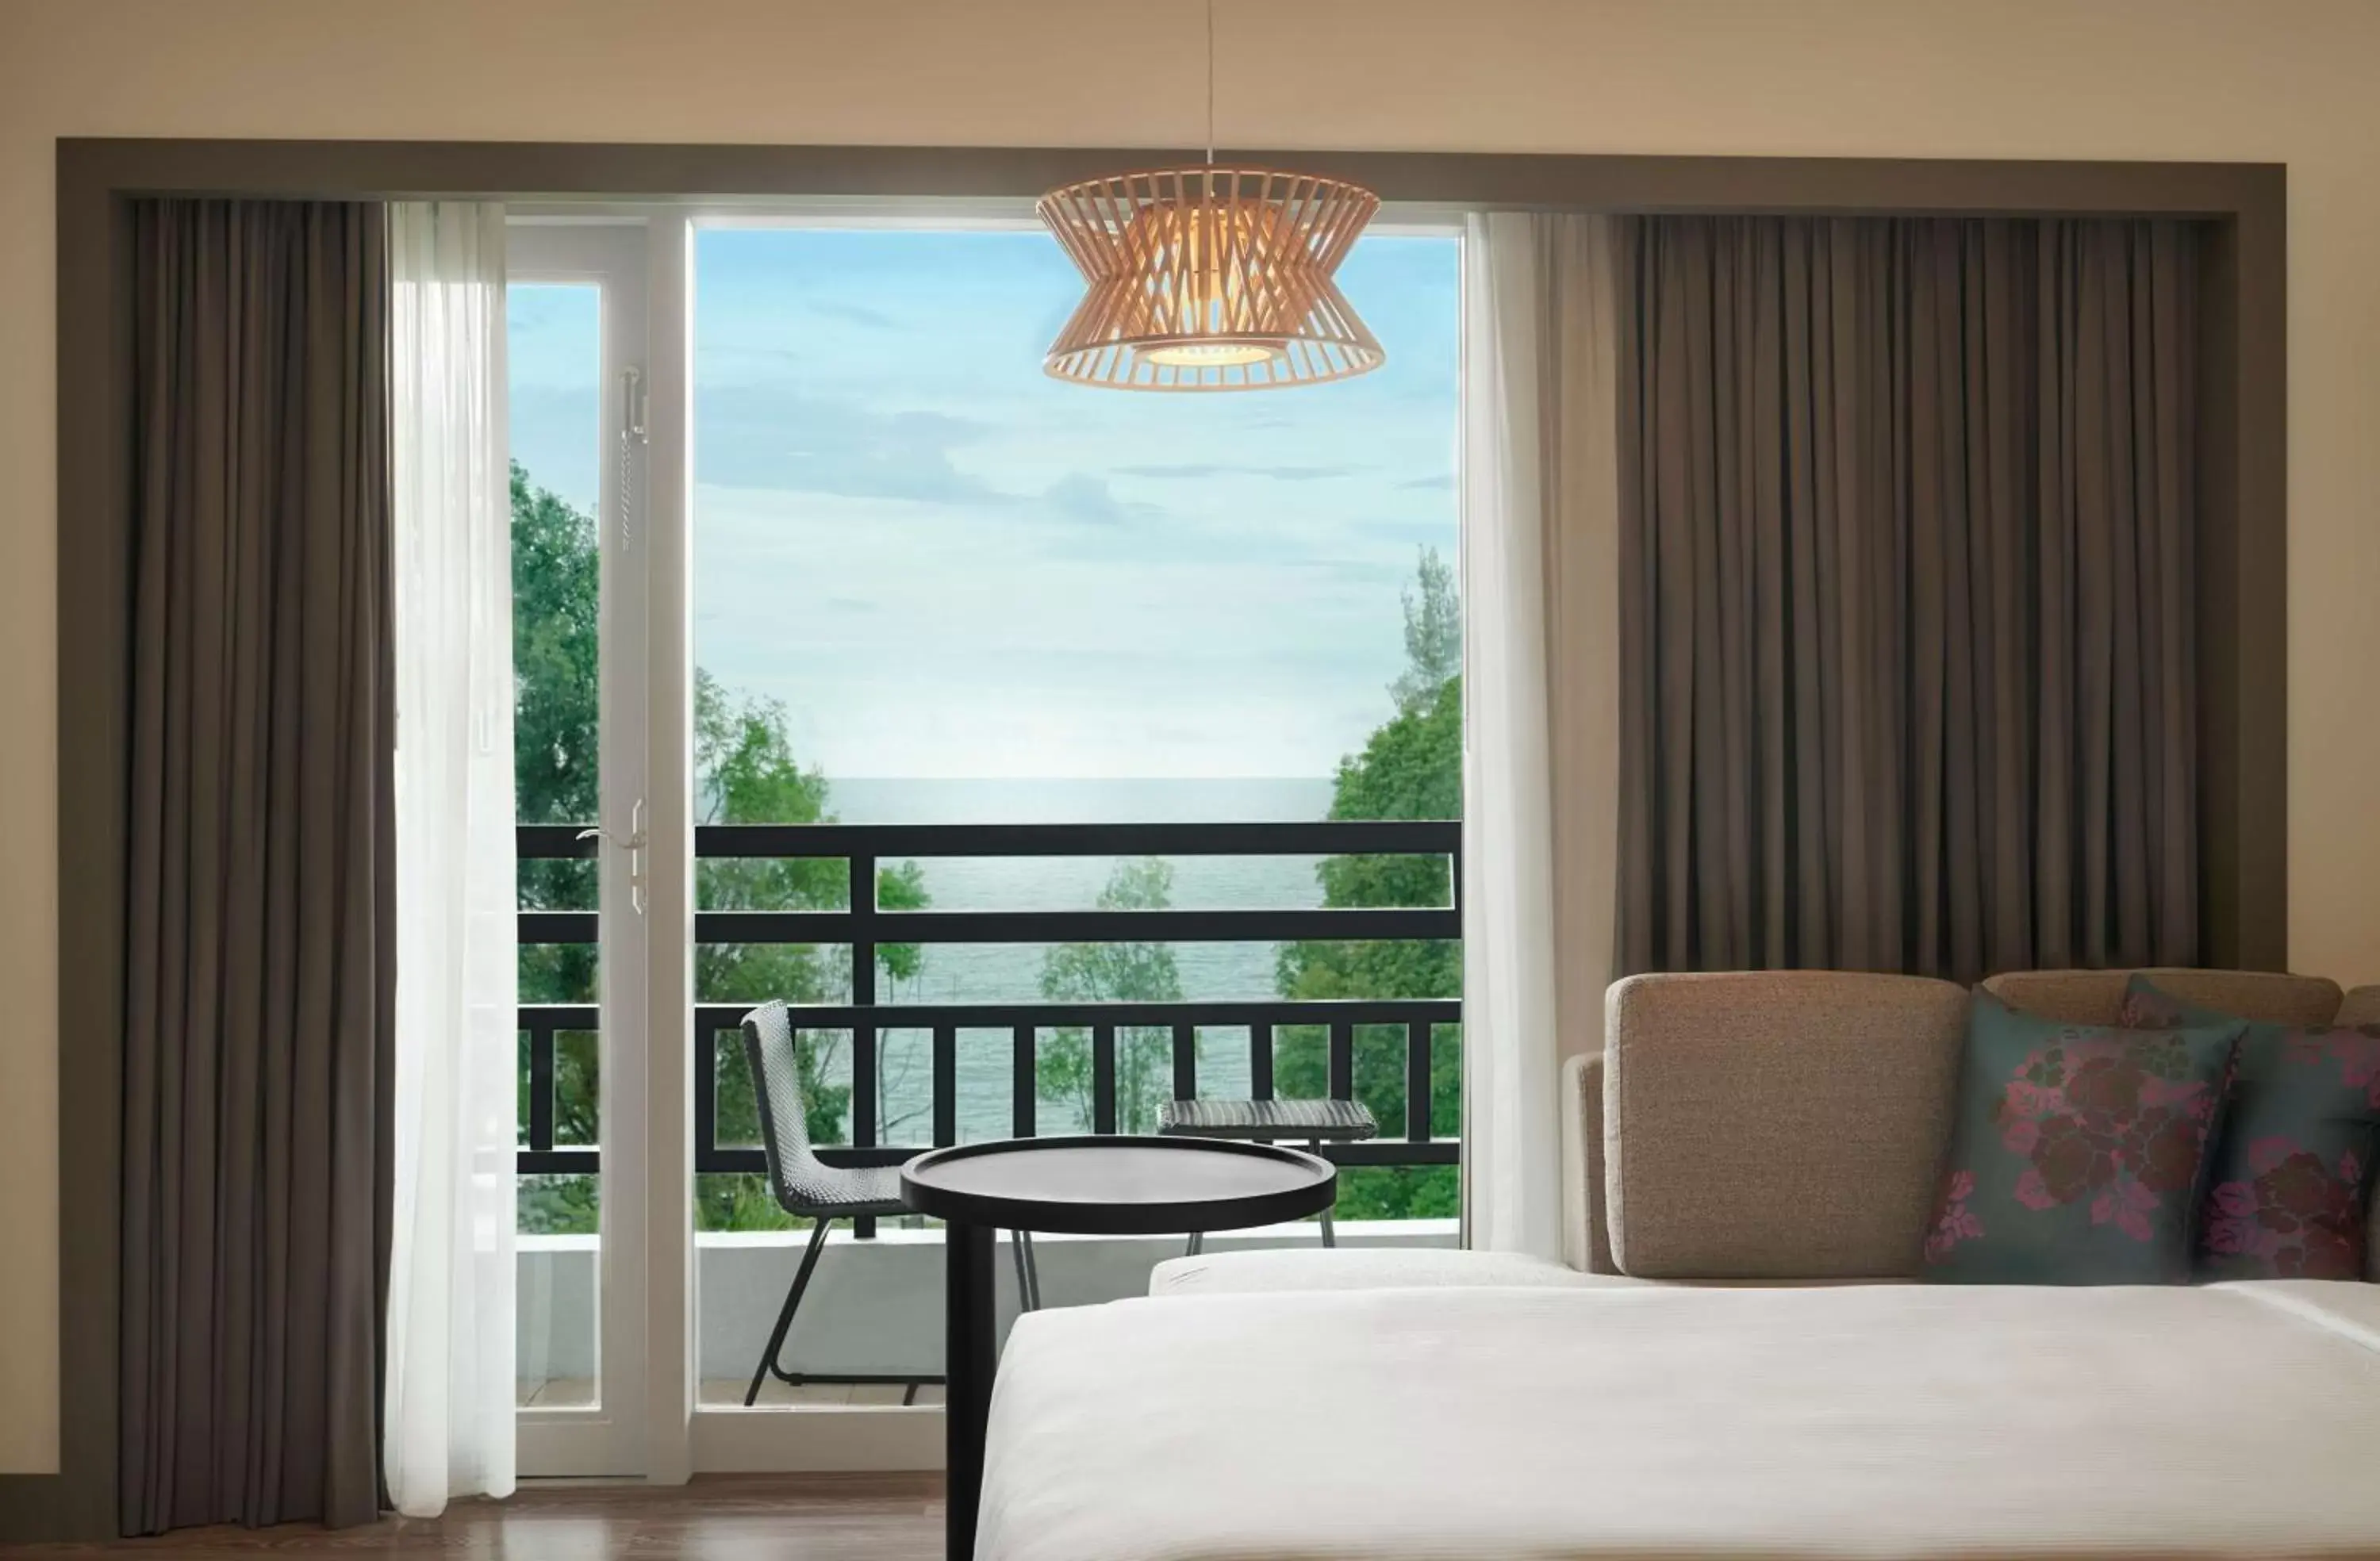 Bed in DoubleTree by Hilton Damai Laut